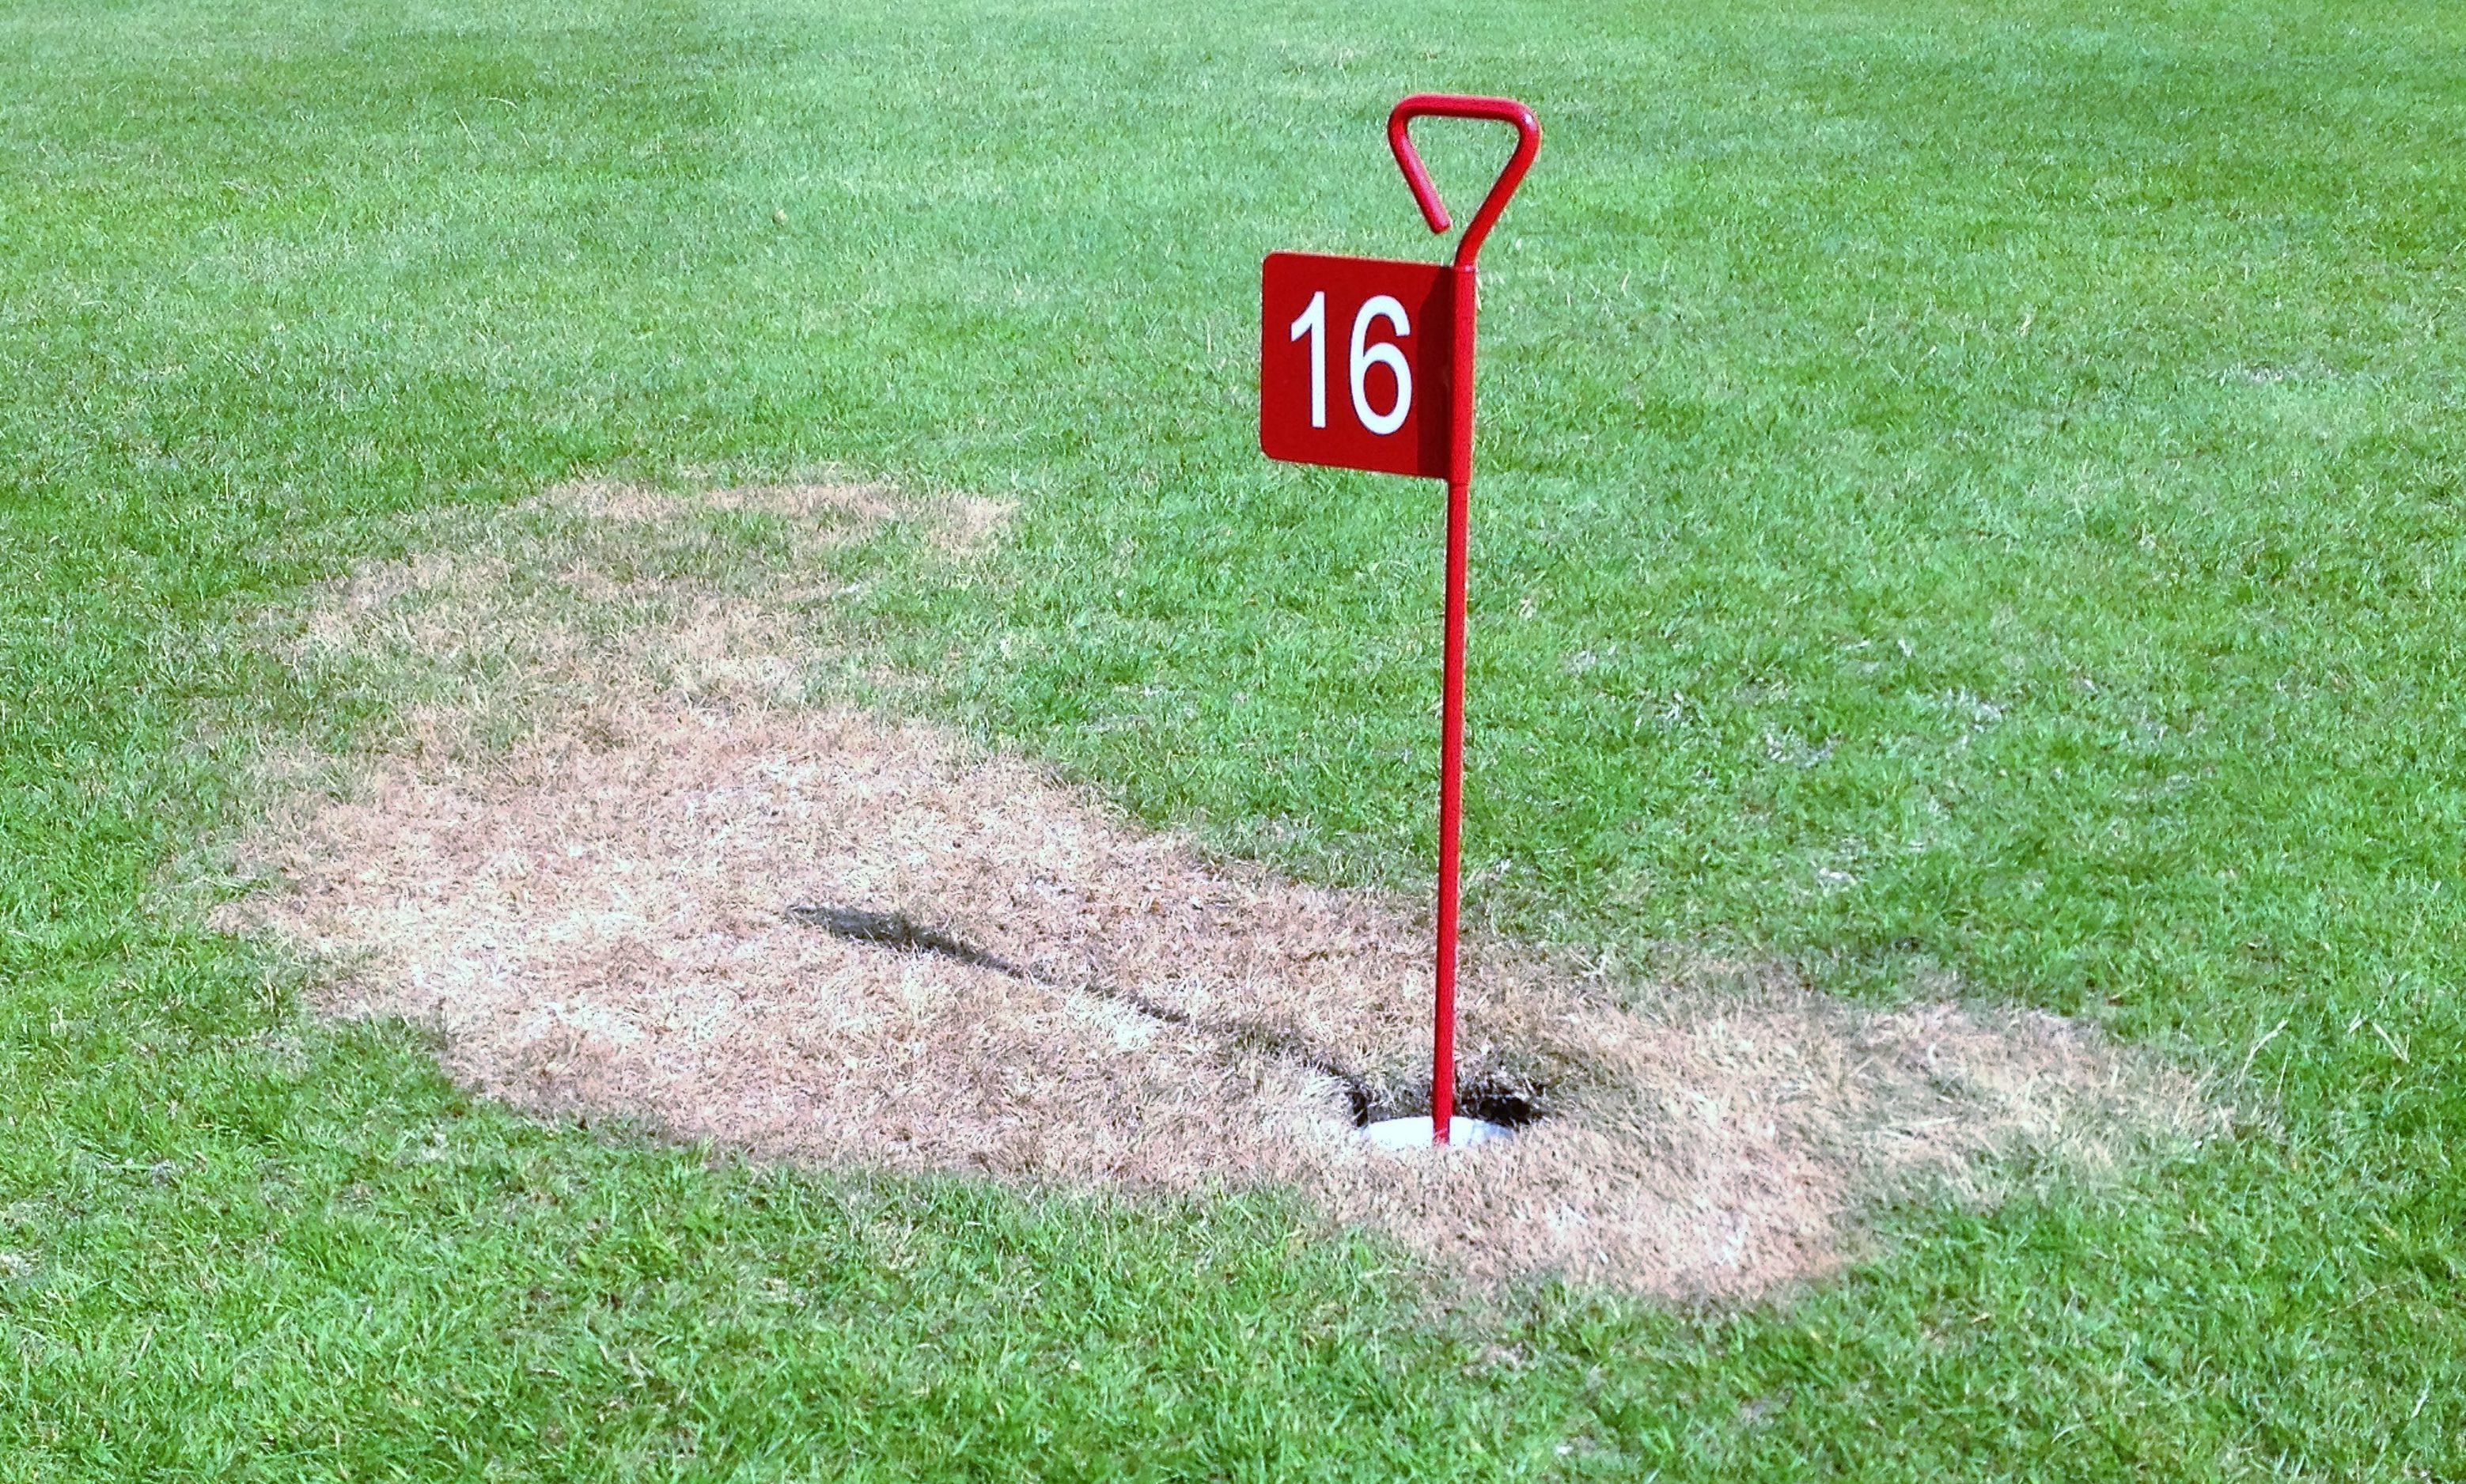 Vandals struck at four holes at Aberfeldy putting green.